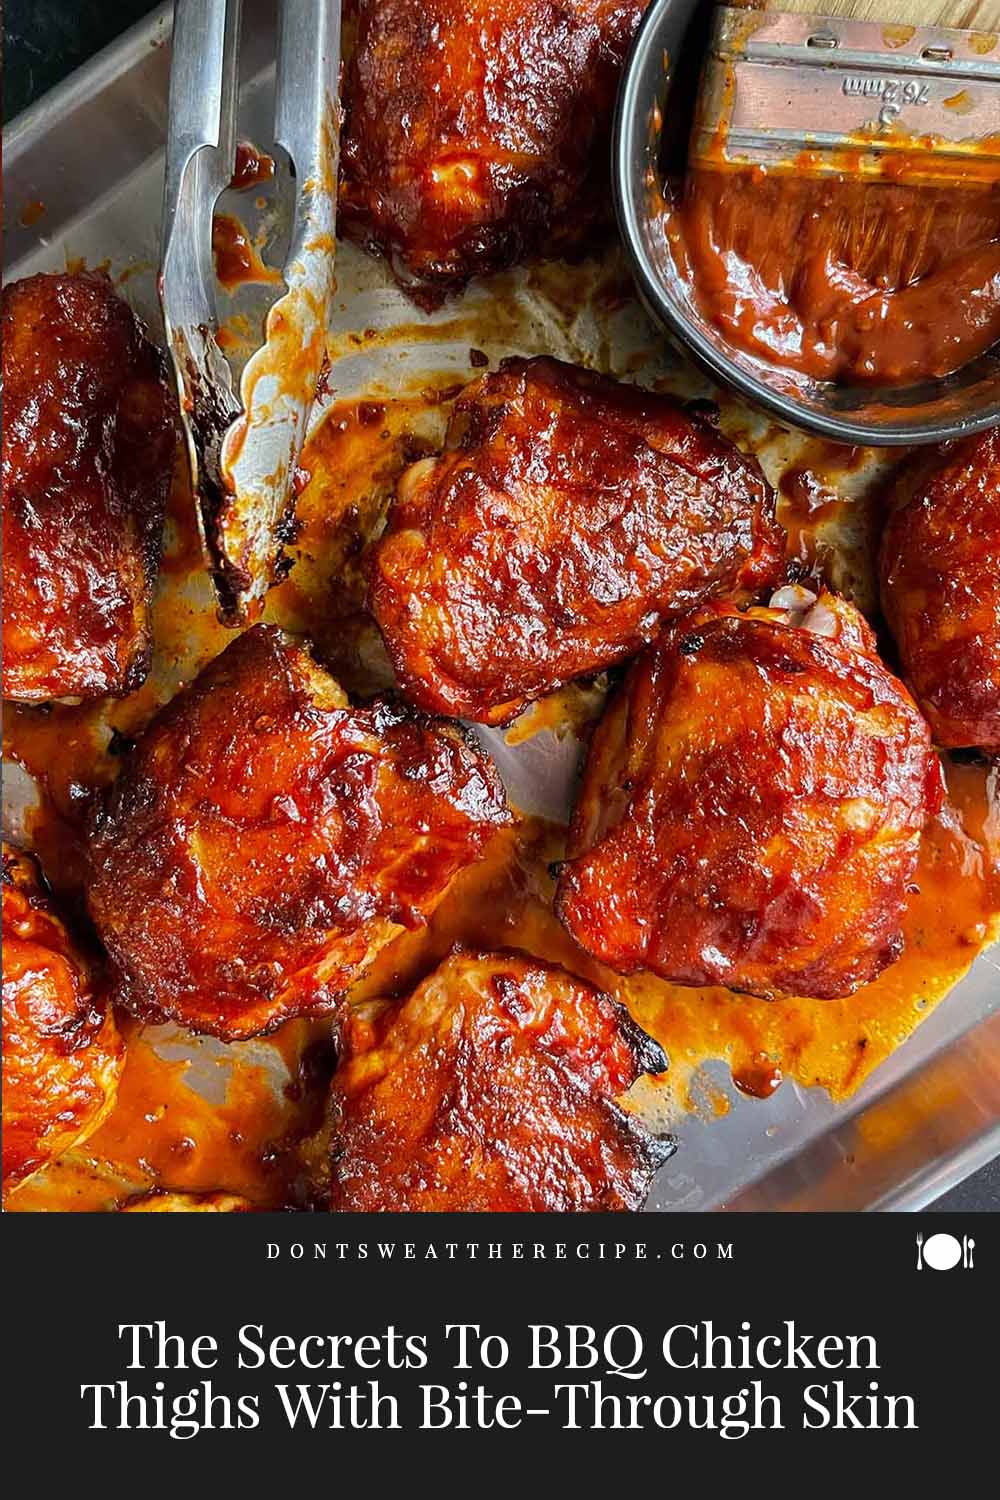 BBQ Chicken Thighs With Bite-Through Skin - Don't Sweat The Recipe